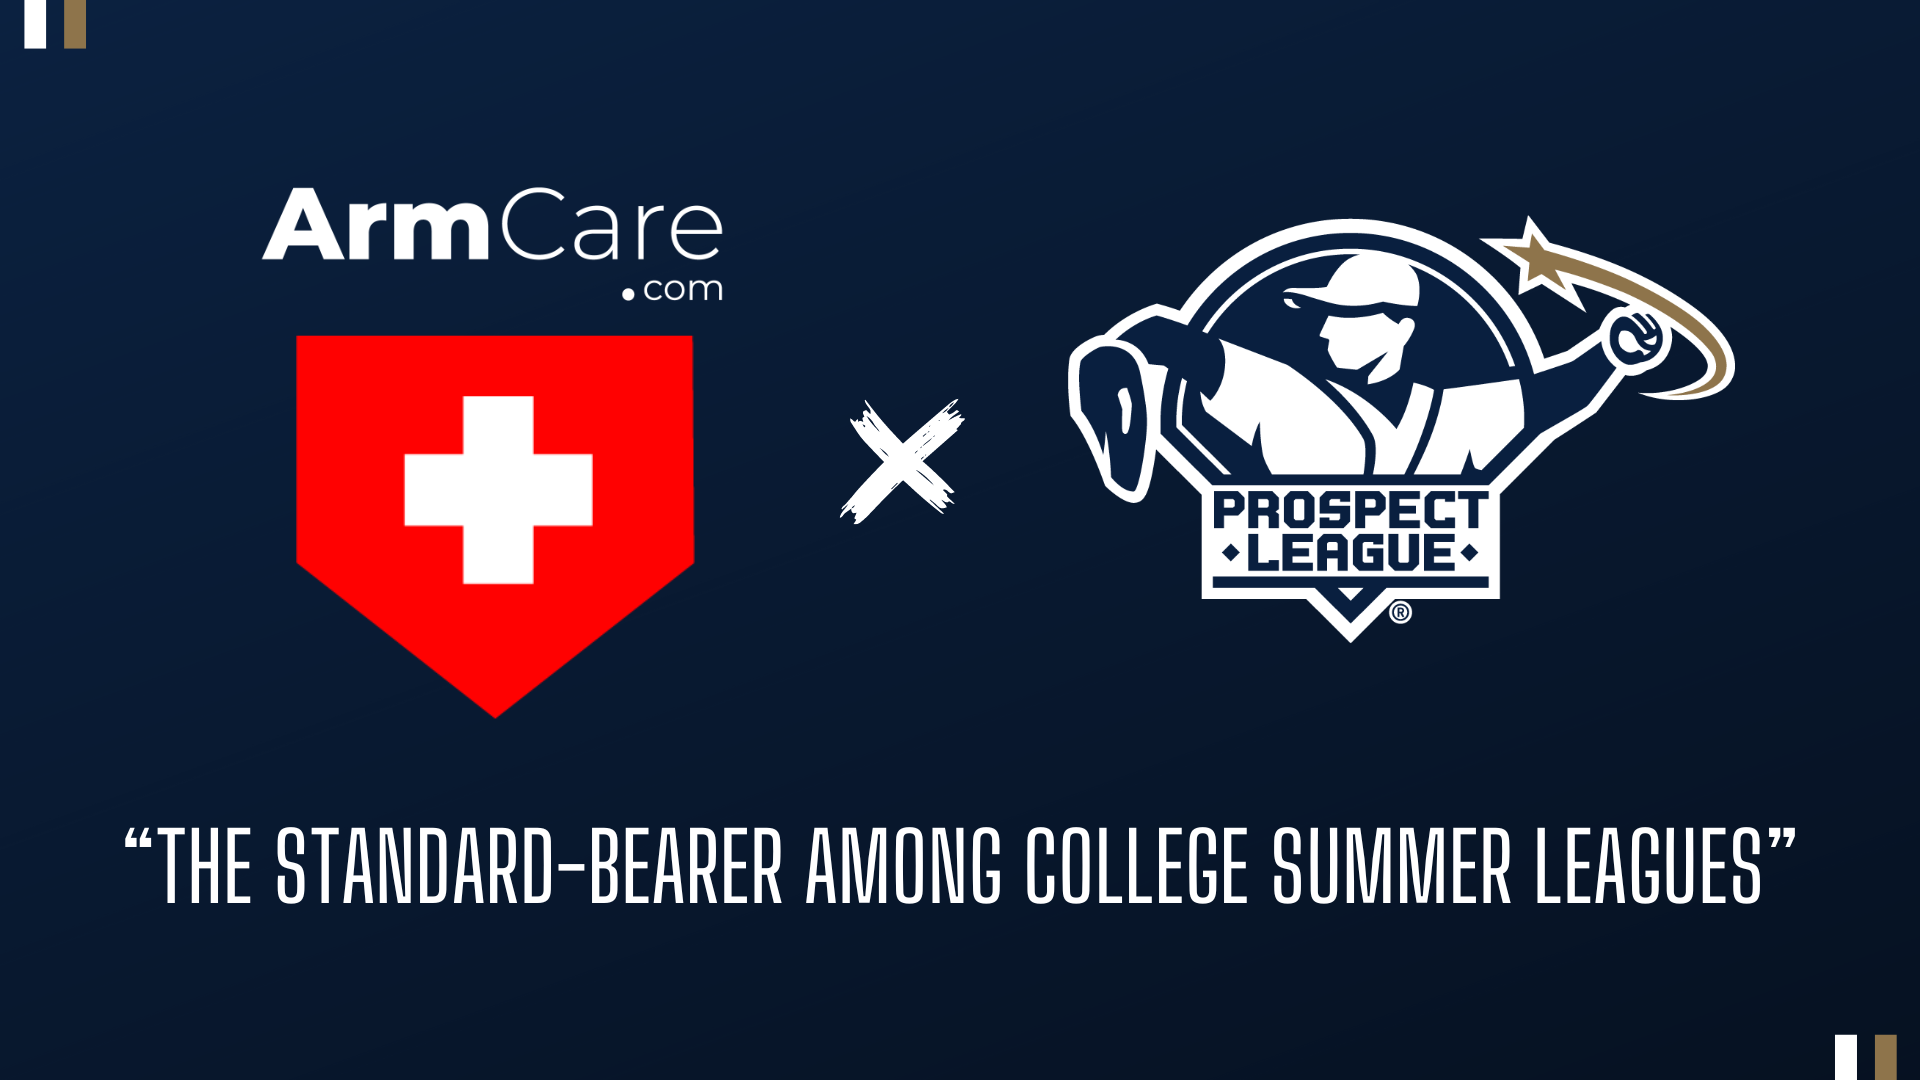 ArmCare.com "The Standard-Bearer Among College Summer Leagues"